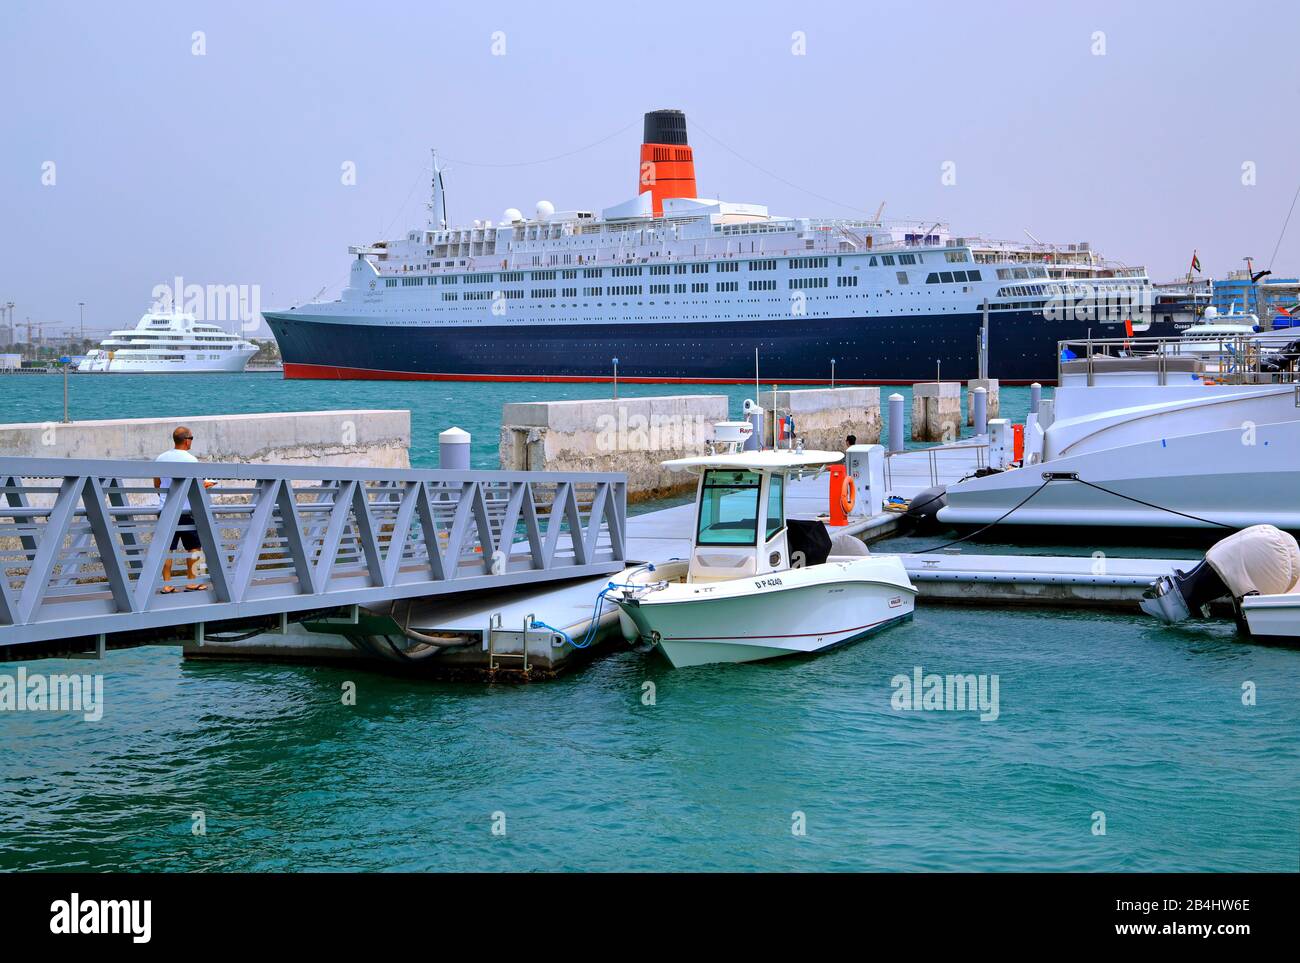 Hotel and museum ship Queen Elizabeth 2 (QE2) in the harbor, Dubai, Persian Gulf, United Arab Emirates Stock Photo